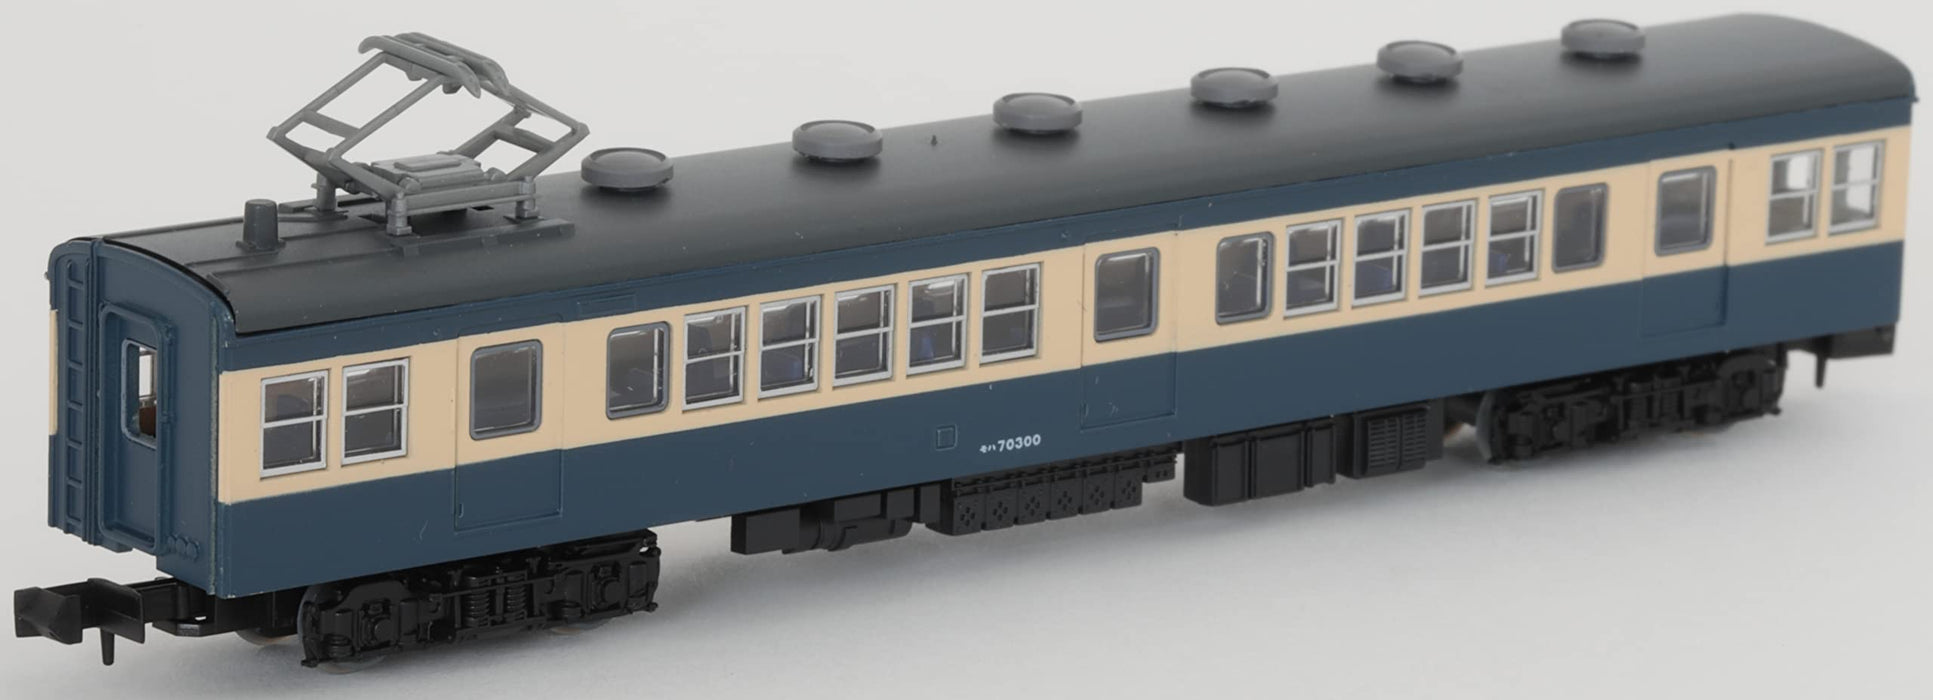 Tomytec Japan Railway Collection JNR Serie 70 Ryomo Linie 4 Wagenset Dioramazubehör Blau 316435